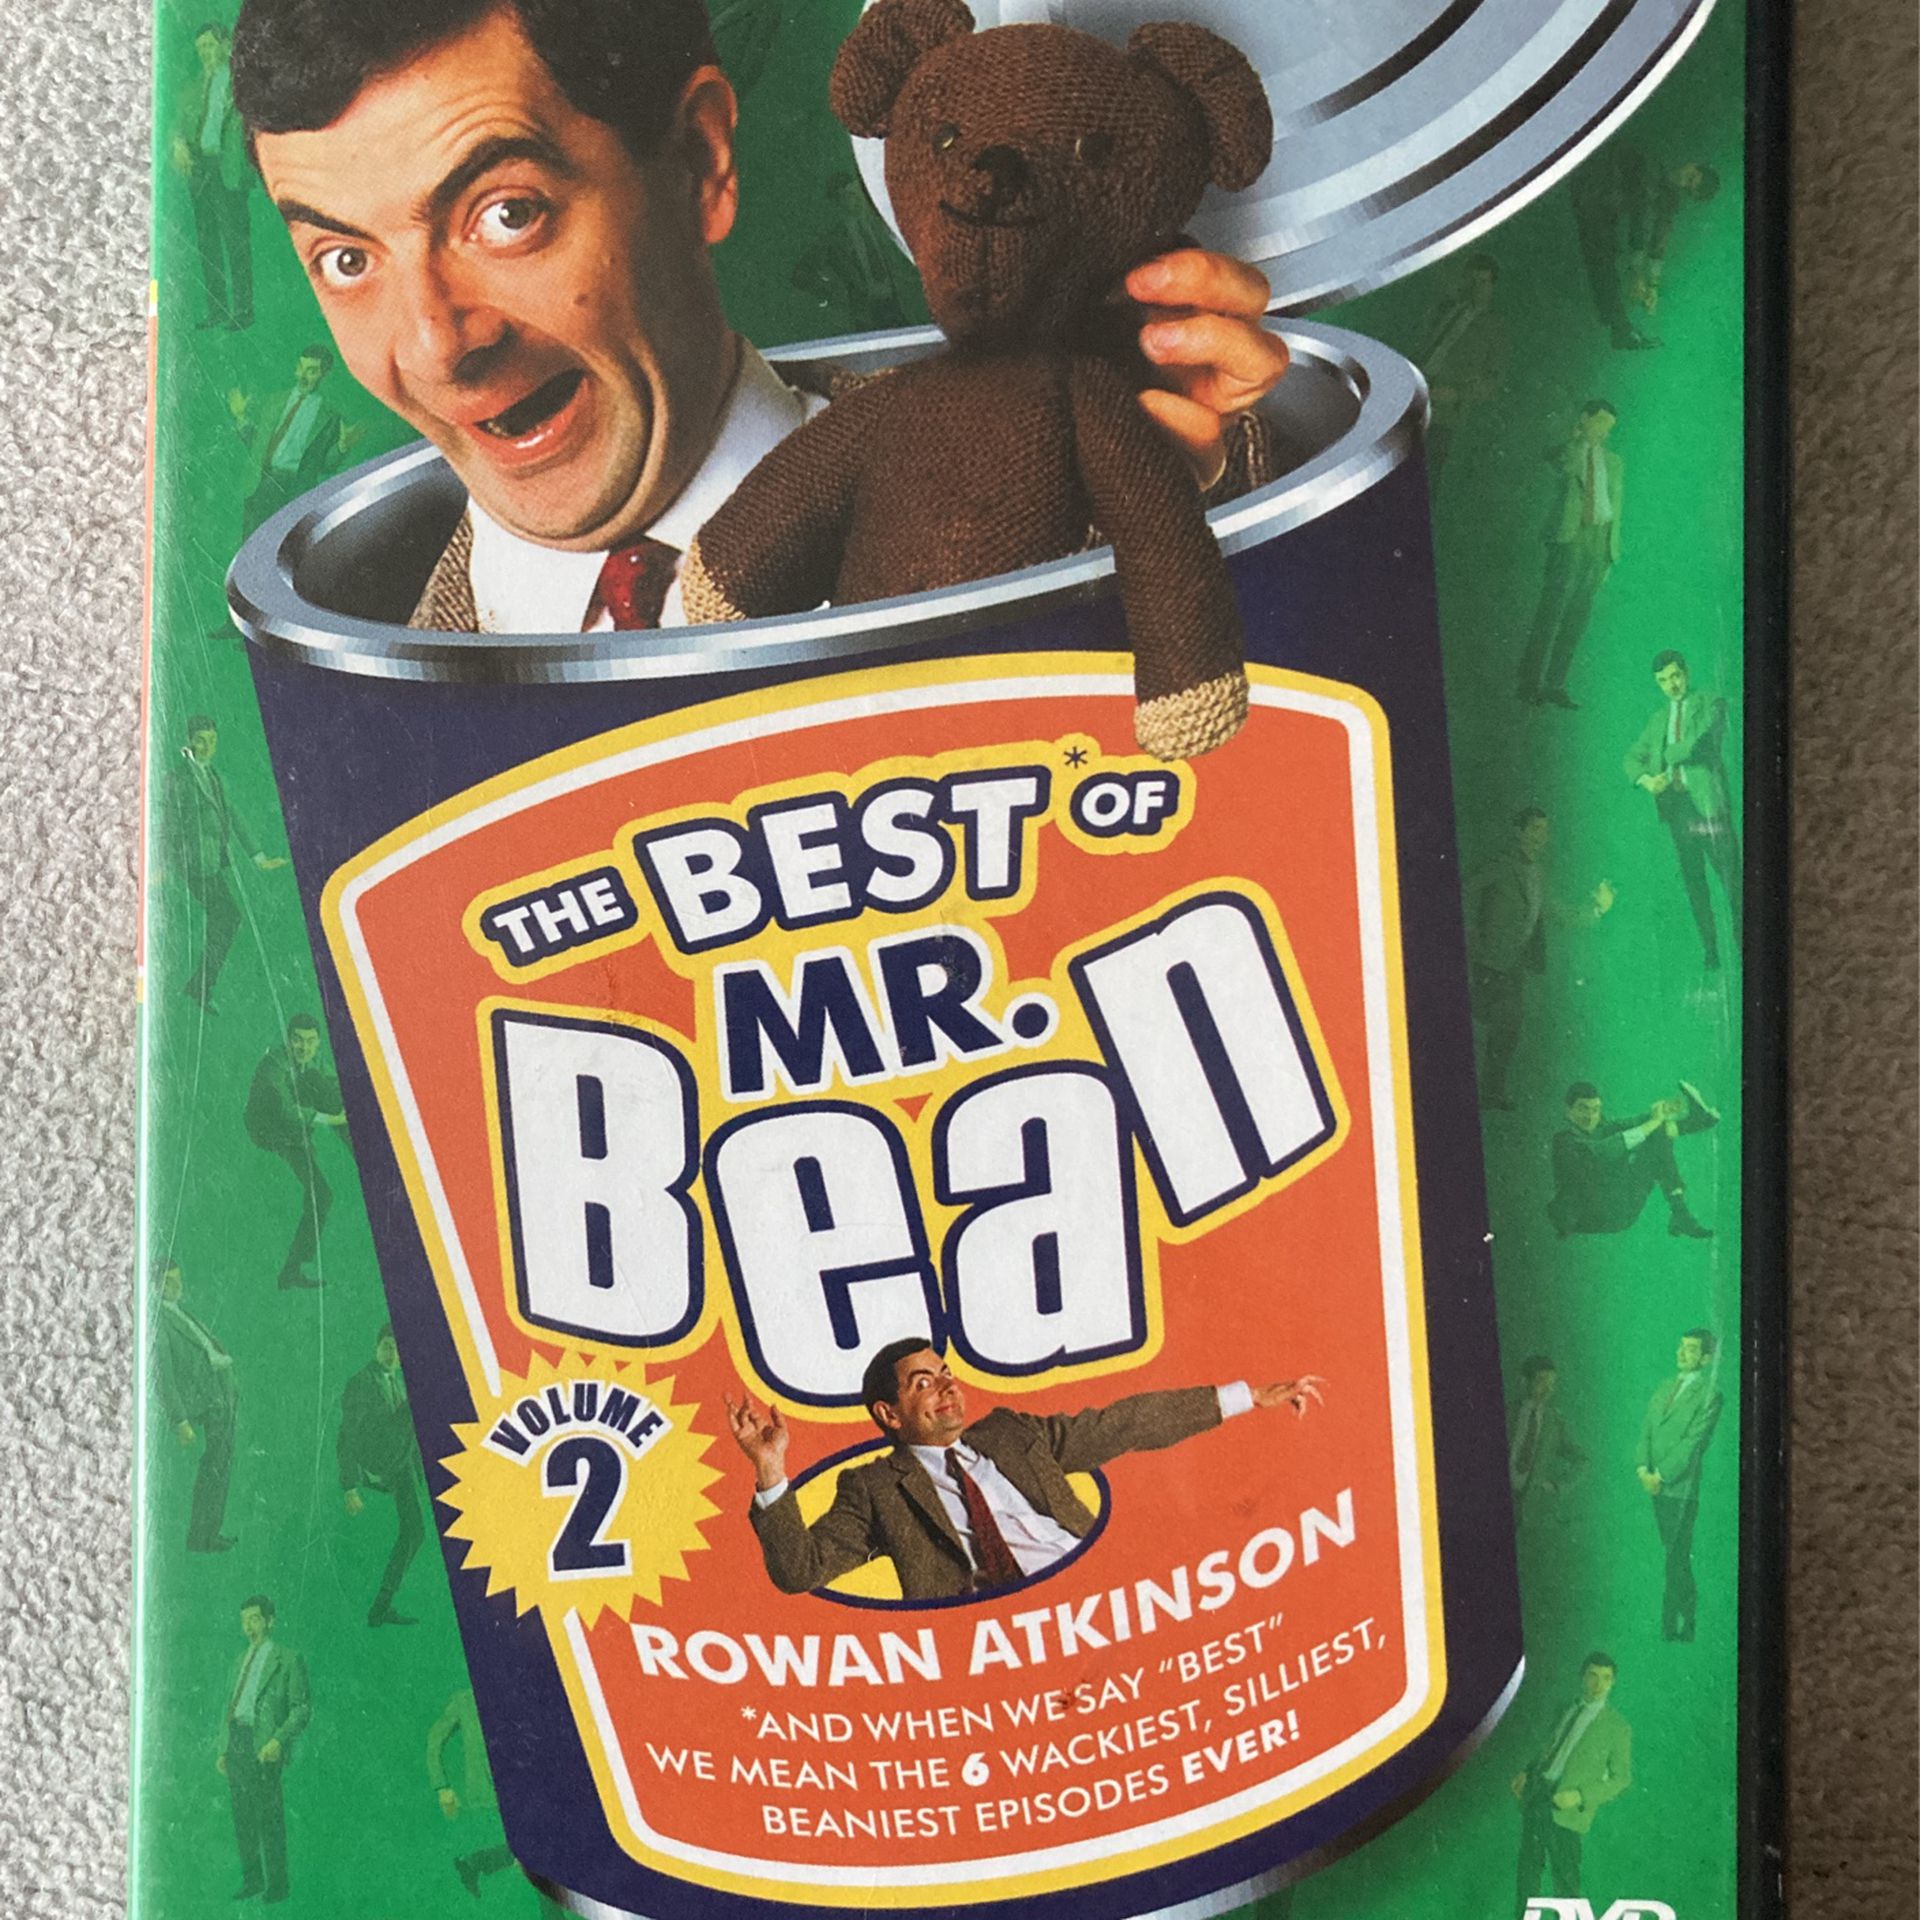 The Best Of Mr. Bean Vol. 2 DVD